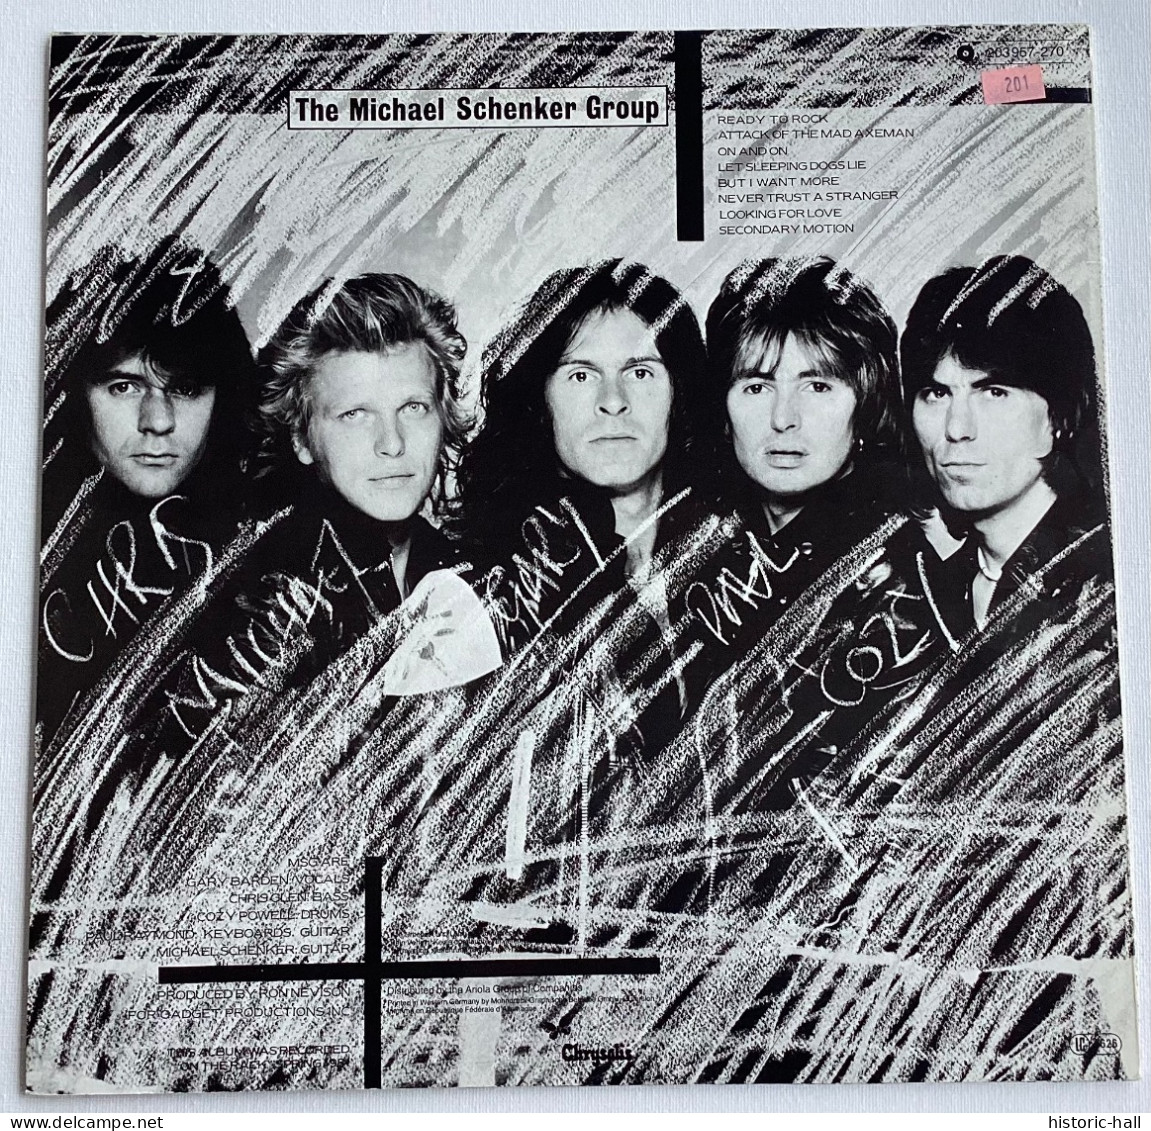 THE MICHAEL SCHENKER GROUP - MSG  - LP  - 1981 - German Press - Hard Rock & Metal